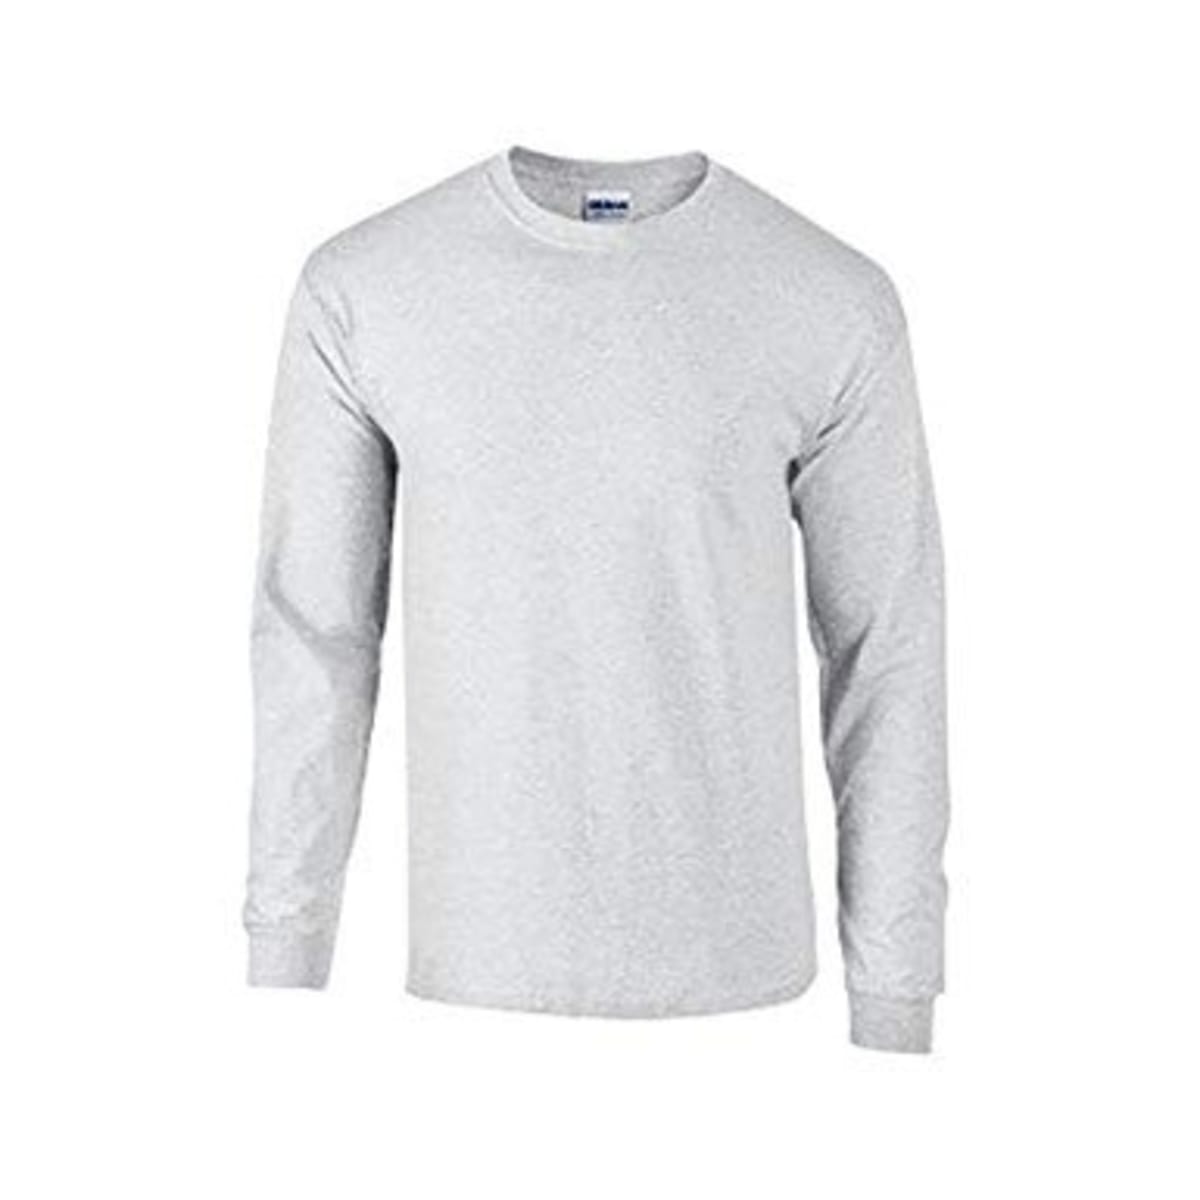 S & Co Men's Plain Long Sleeve Shirt